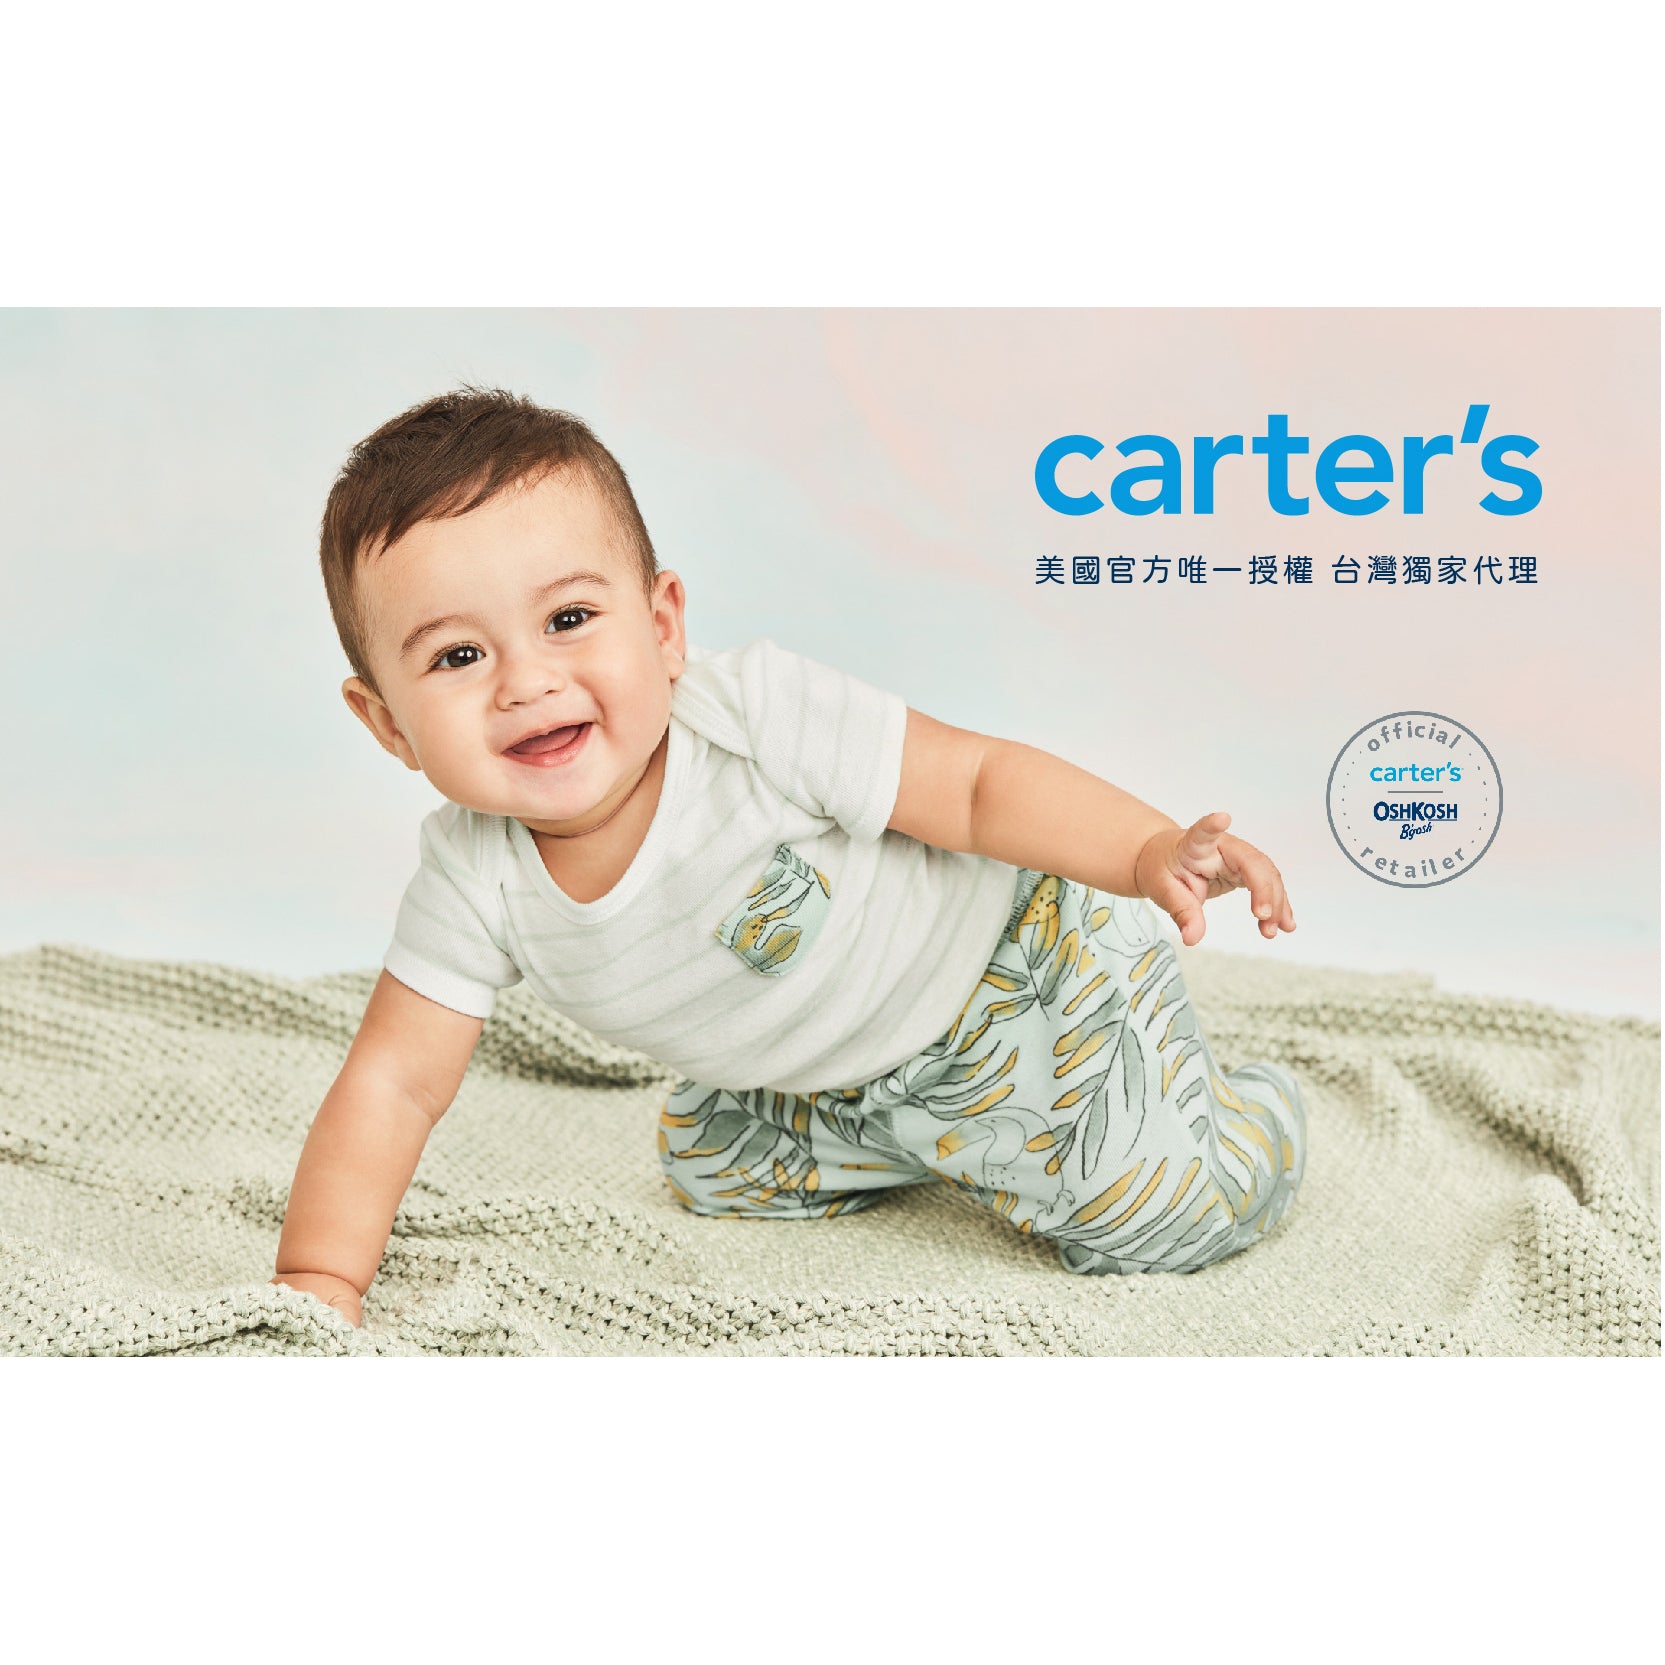 Carter's silver gray casual jacket (12M-24M) – Carter's｜Oshkosh